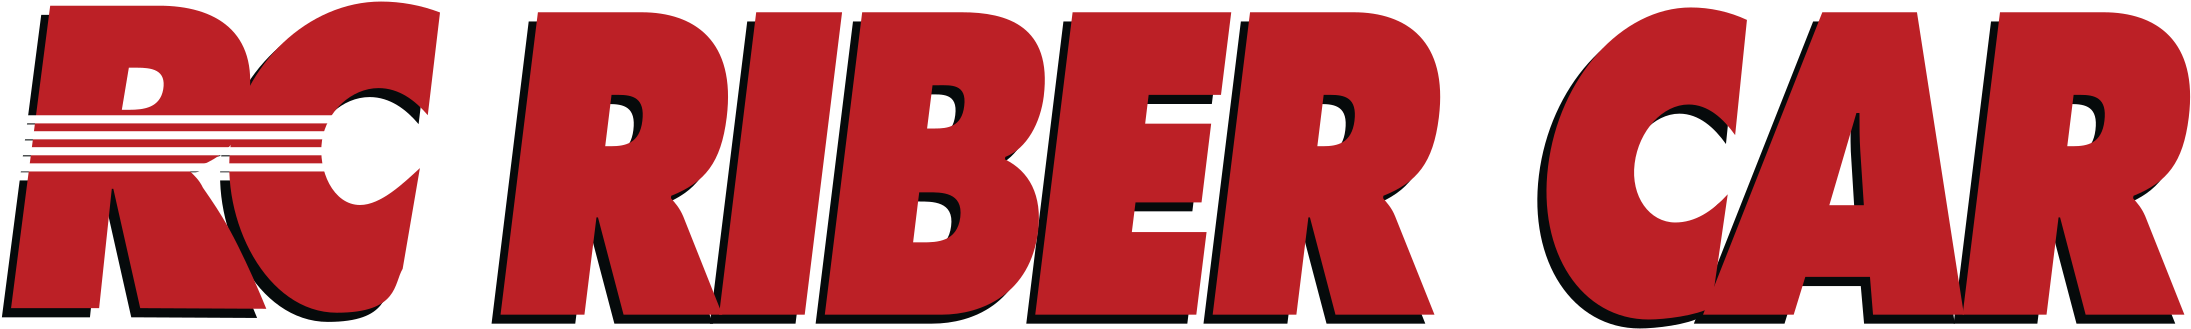 Riber Car Logo Png Transparent - Car (2400x2400), Png Download